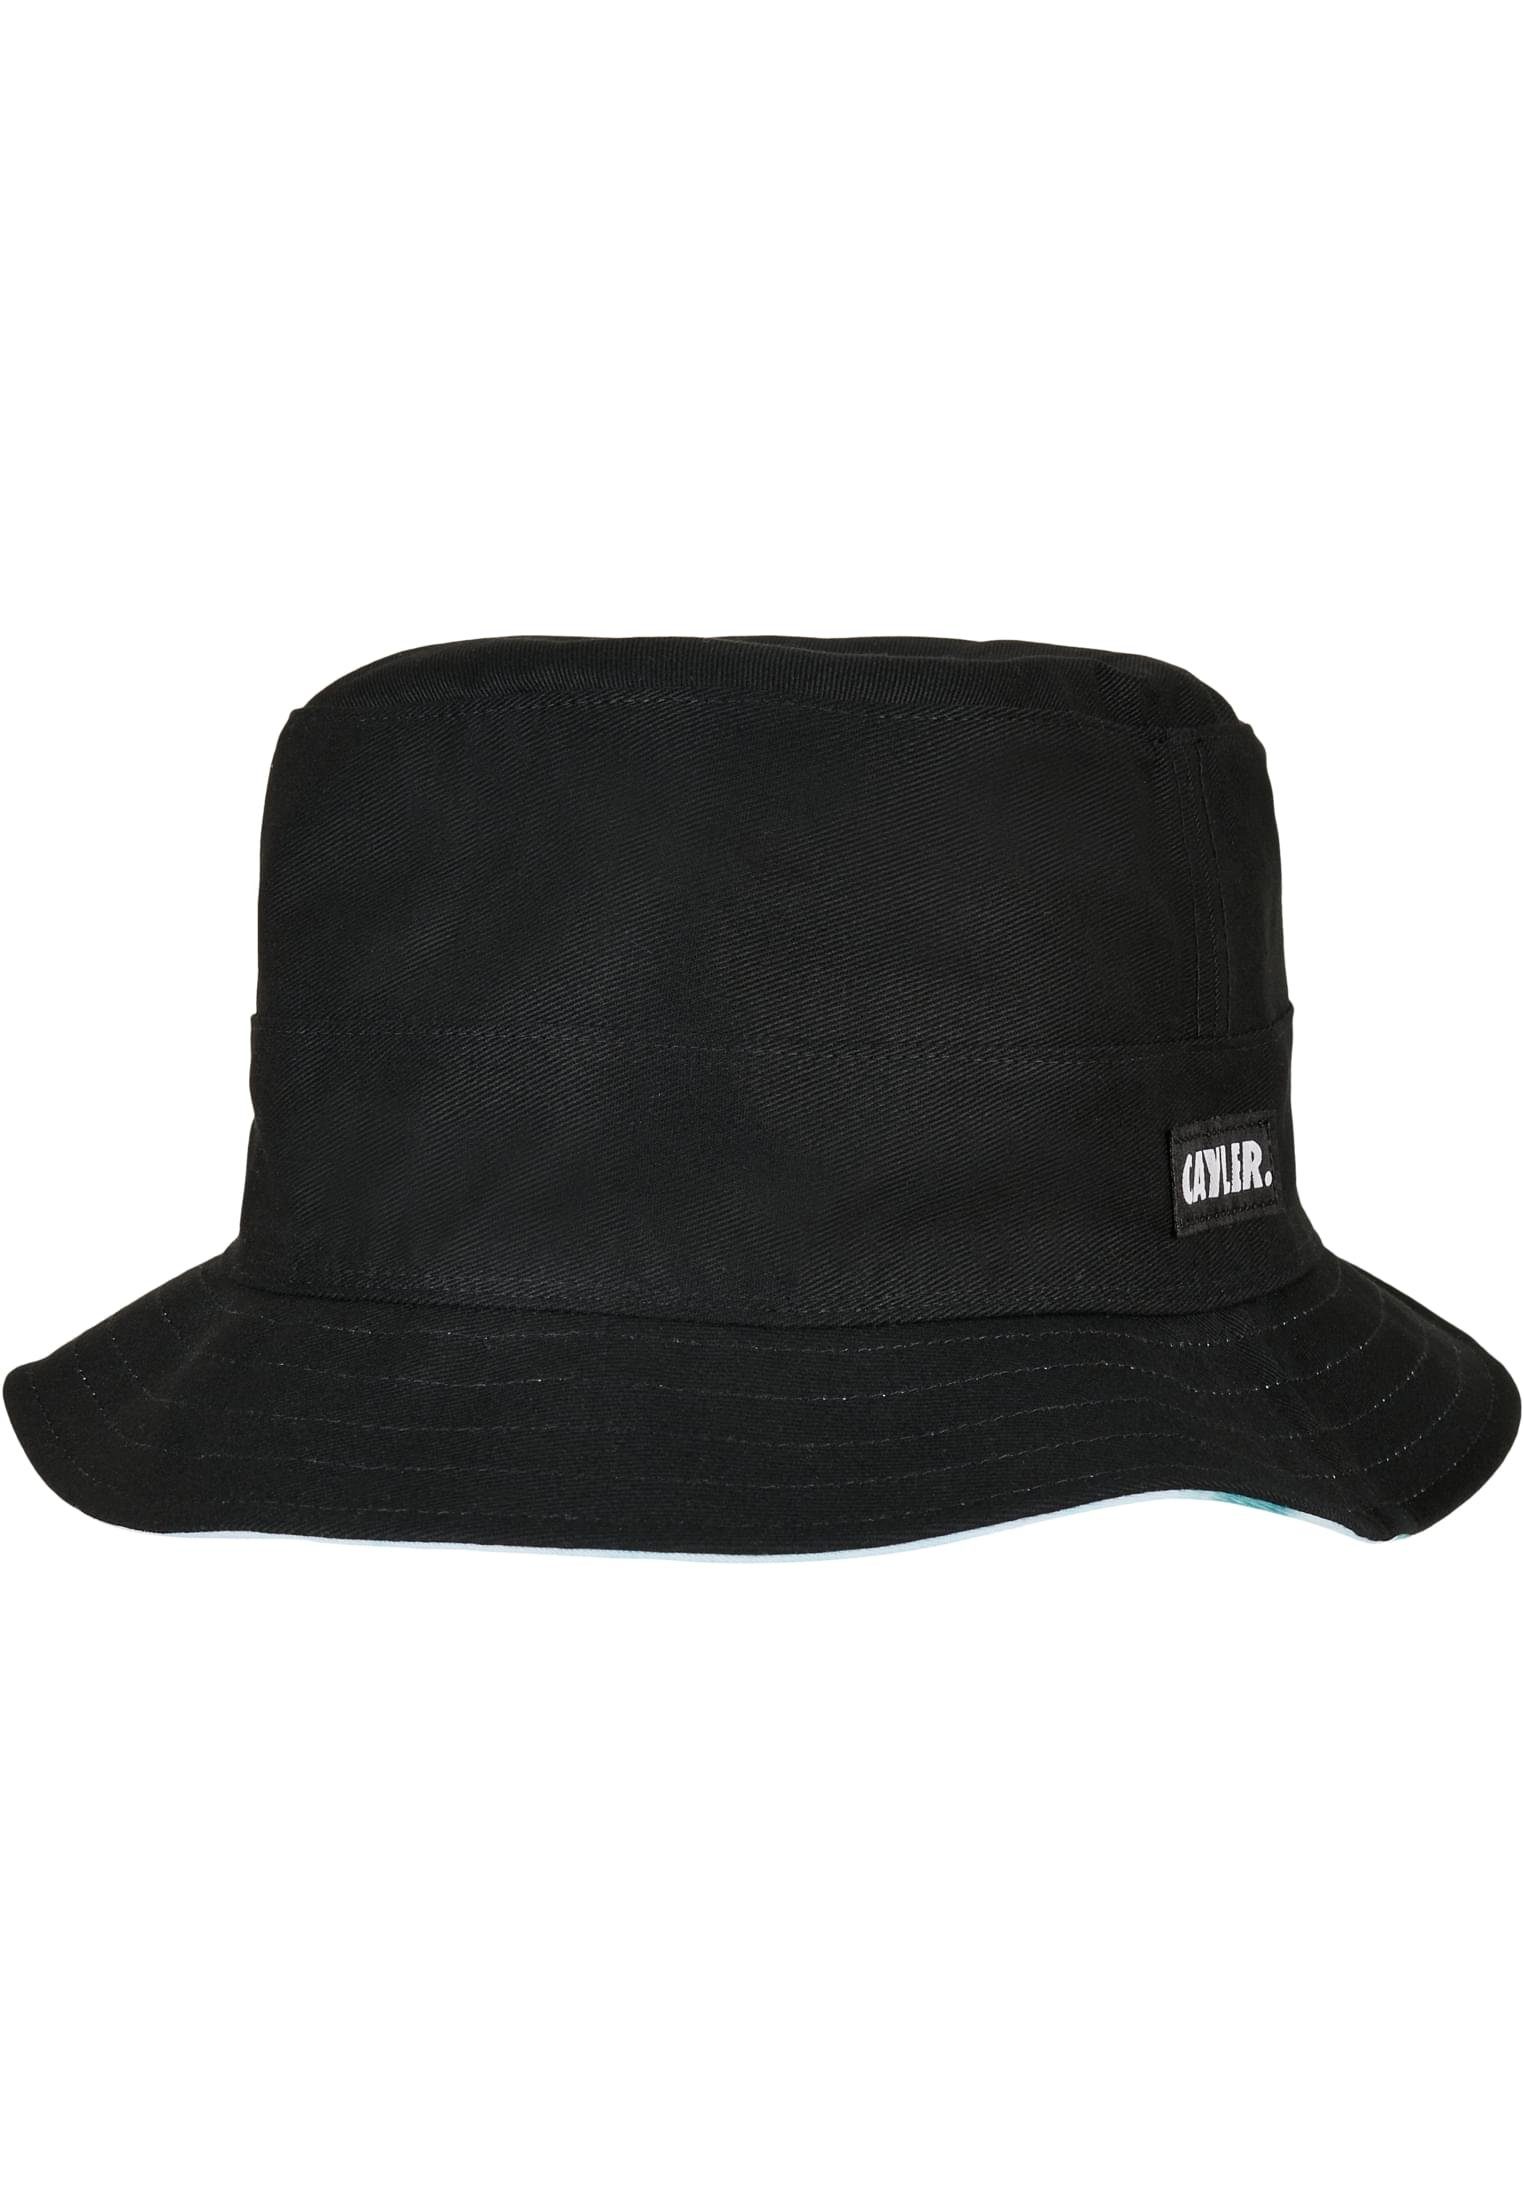 SONS CAYLER Good C&S Flex Accessoires Cap & Bucket Reversible Foam Feelin Hat